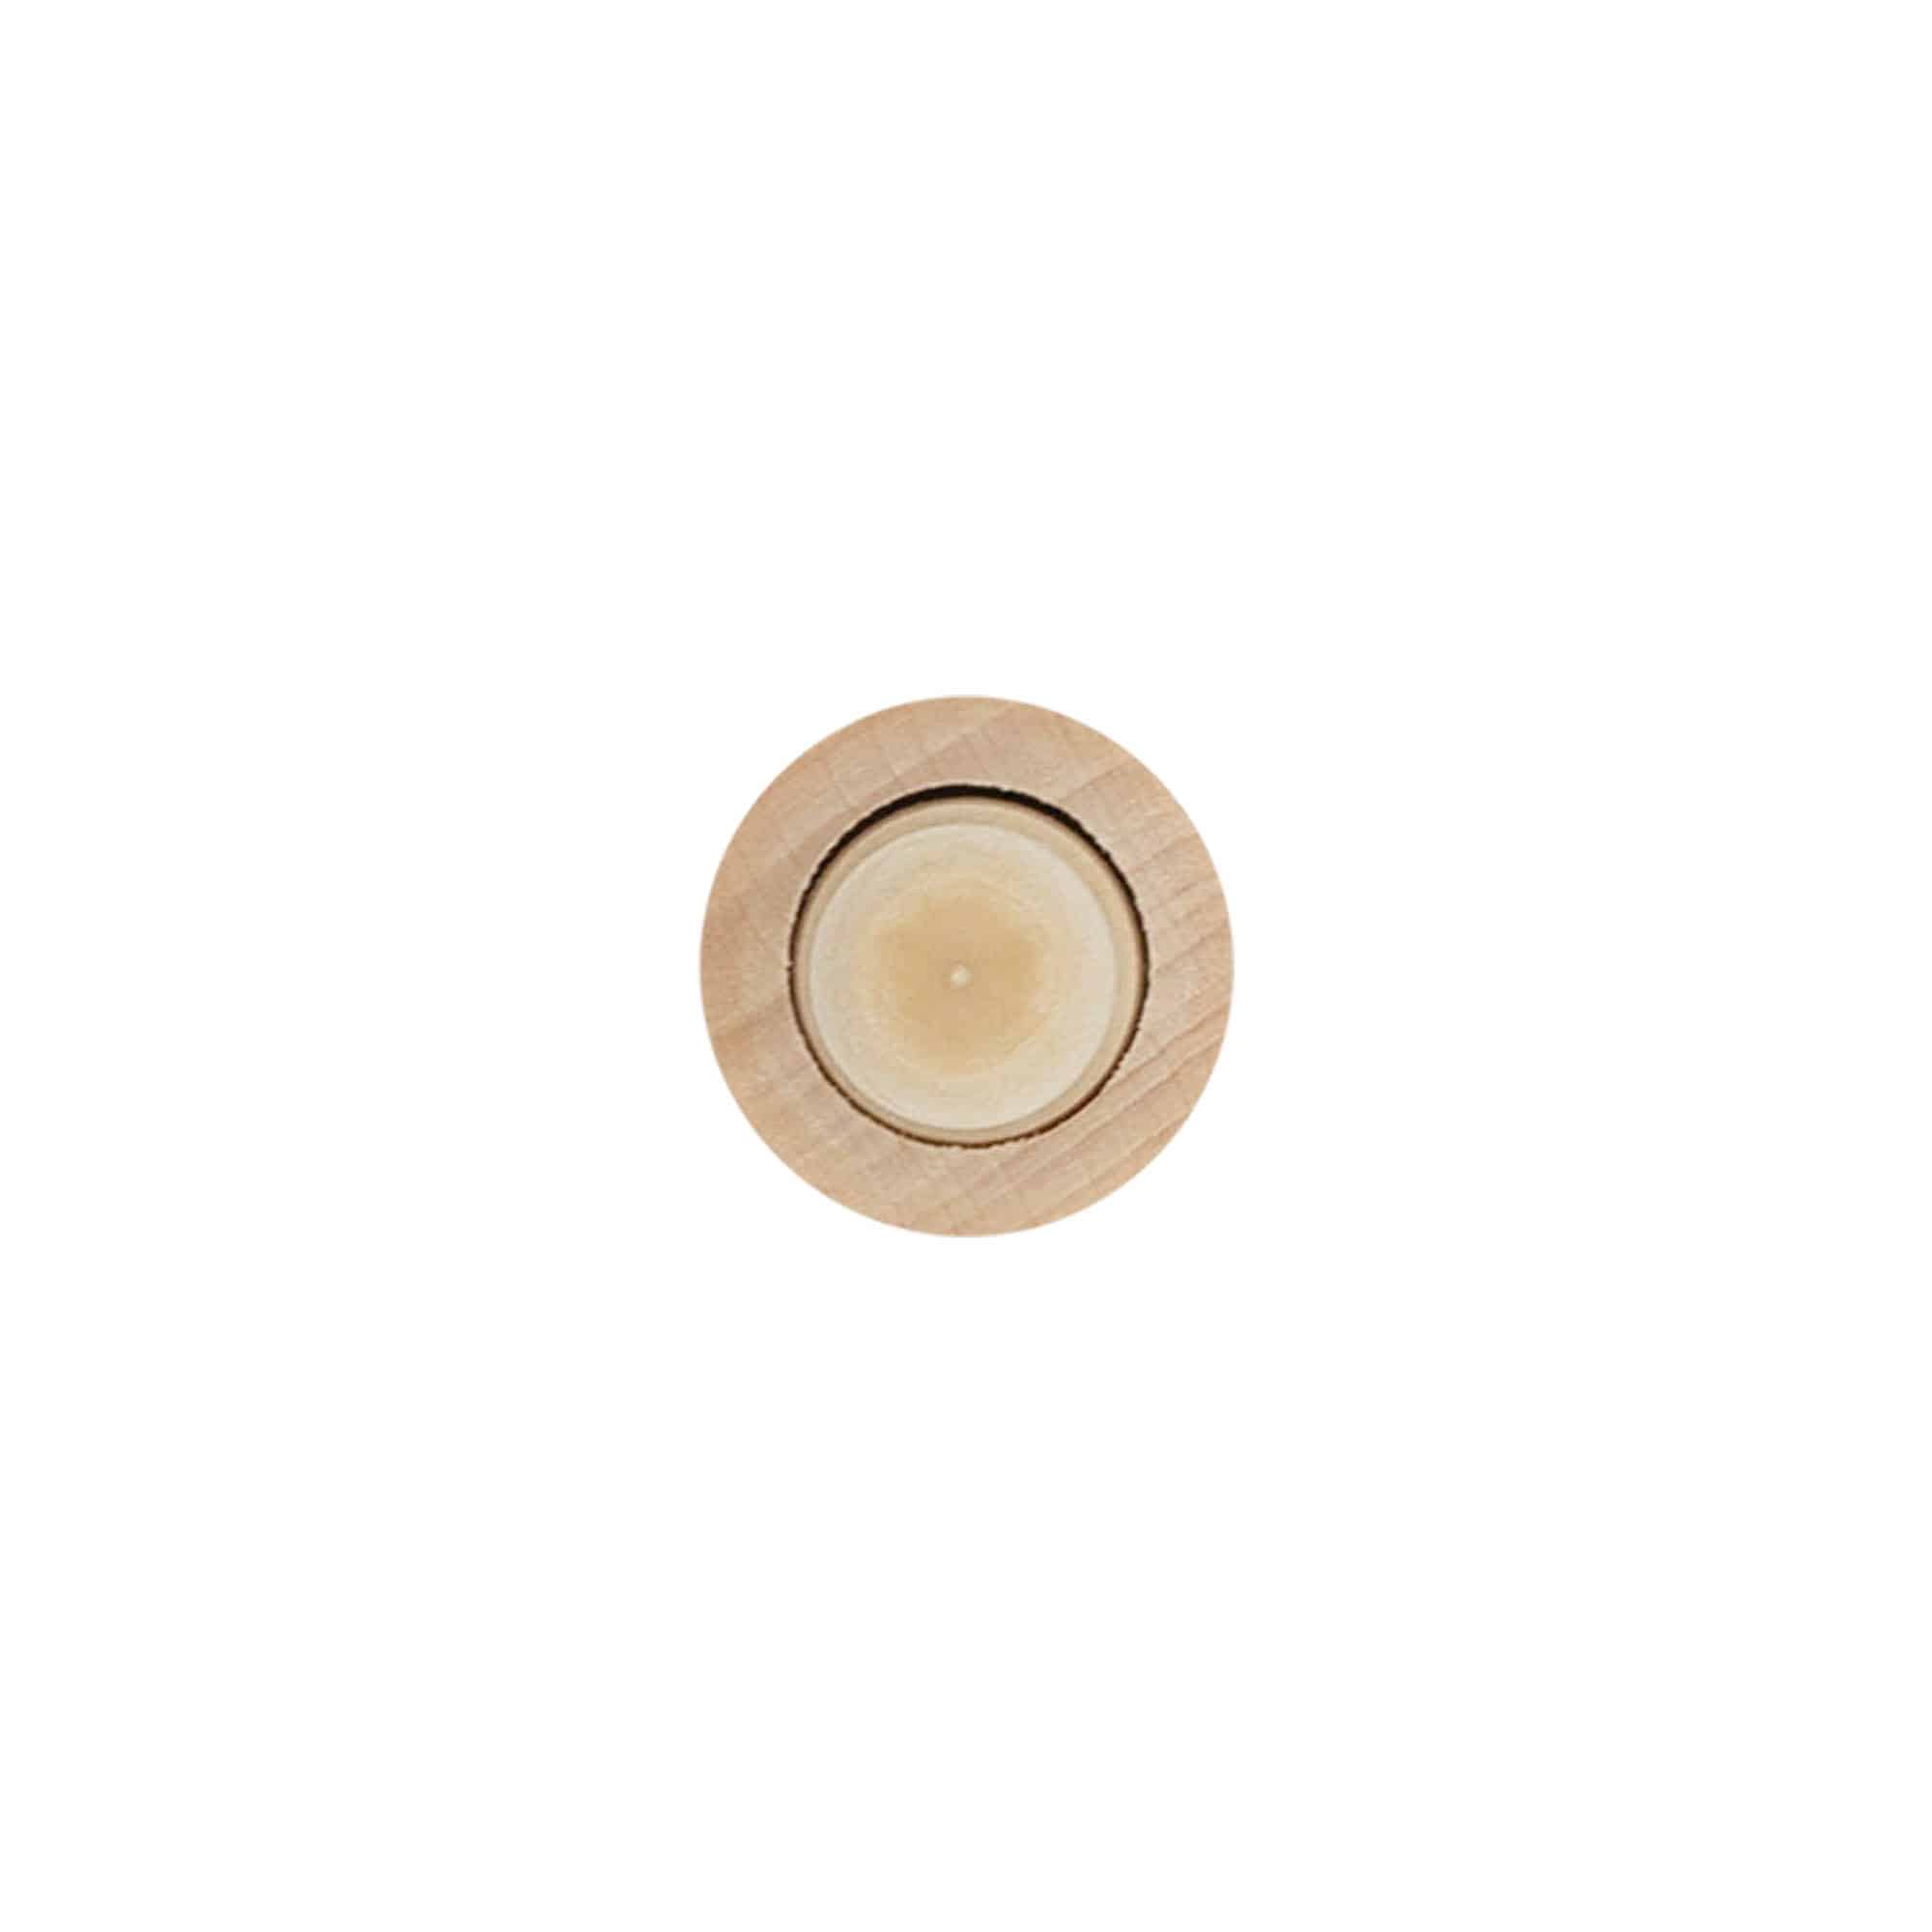 16 mm mushroom cork, plastic/wood, multicolour, for opening: cork